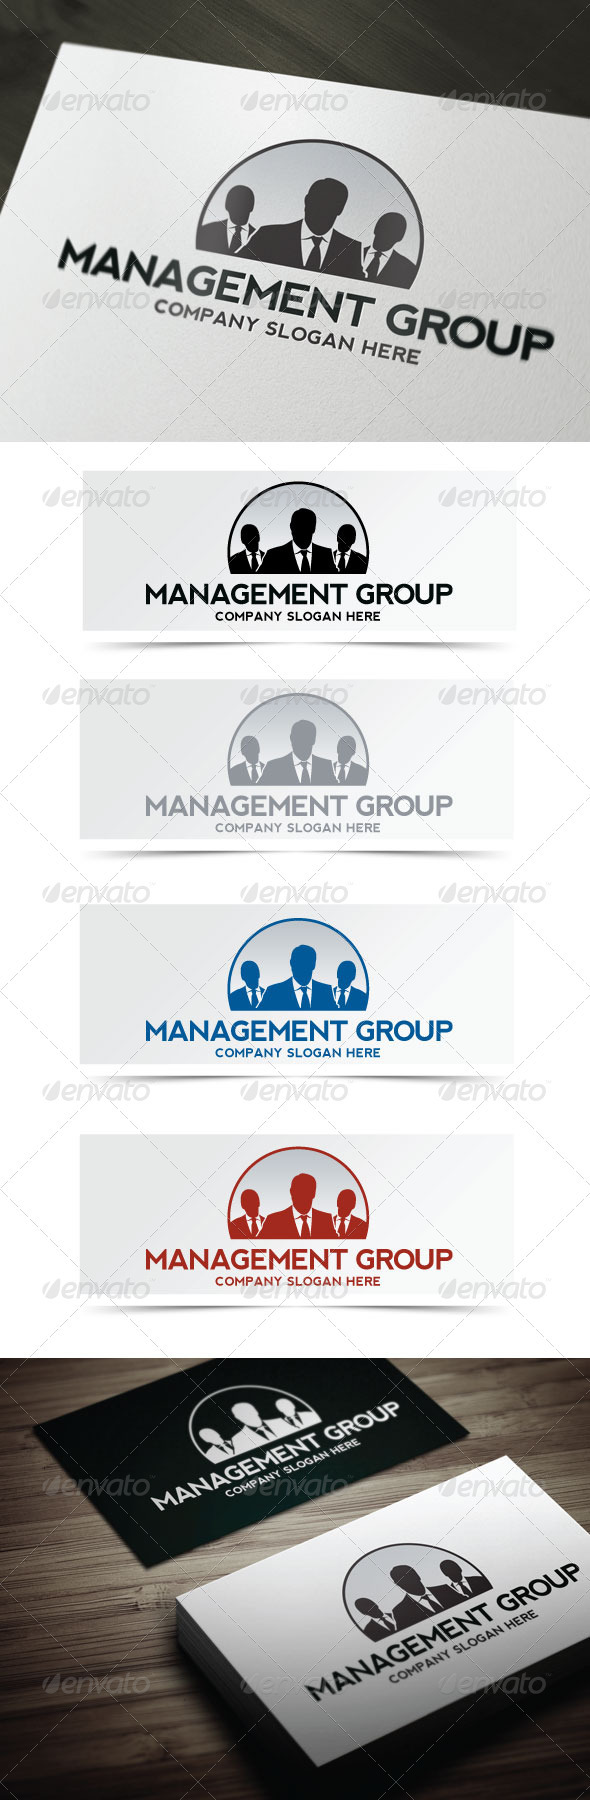 Management Group